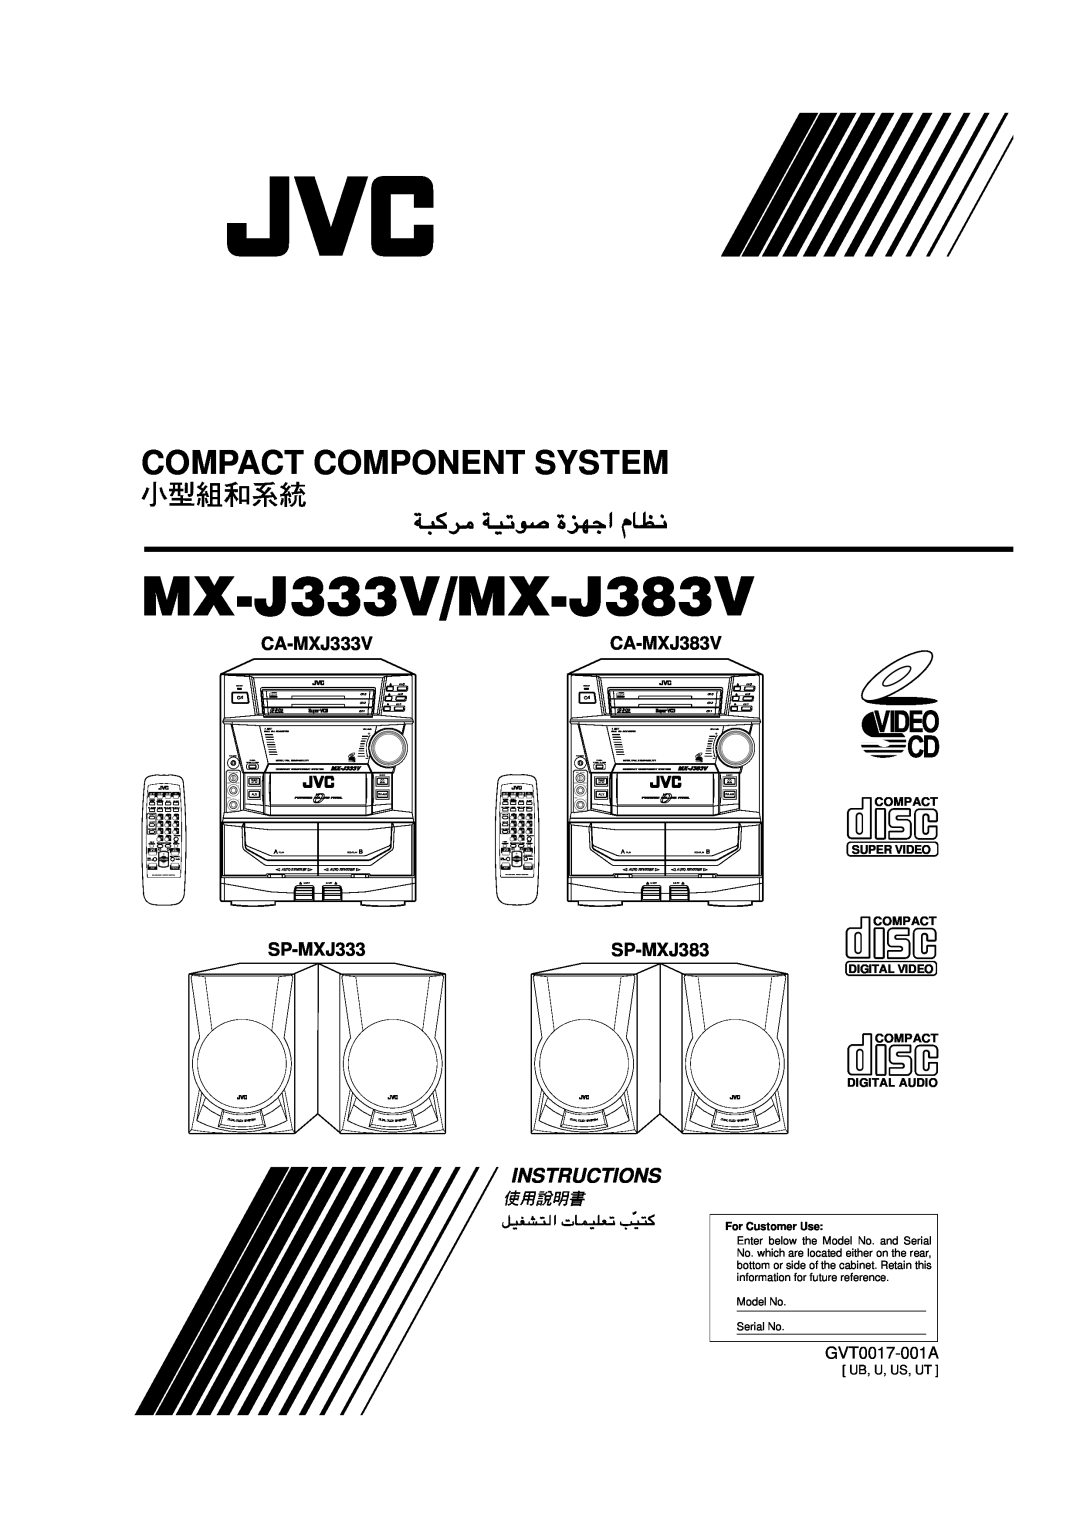 JVC MX-J333VU manual Compact Component System, MX-J333V/MX-J383V, Instructions, CA-MXJ333V, CA-MXJ383V, SP-MXJ333 